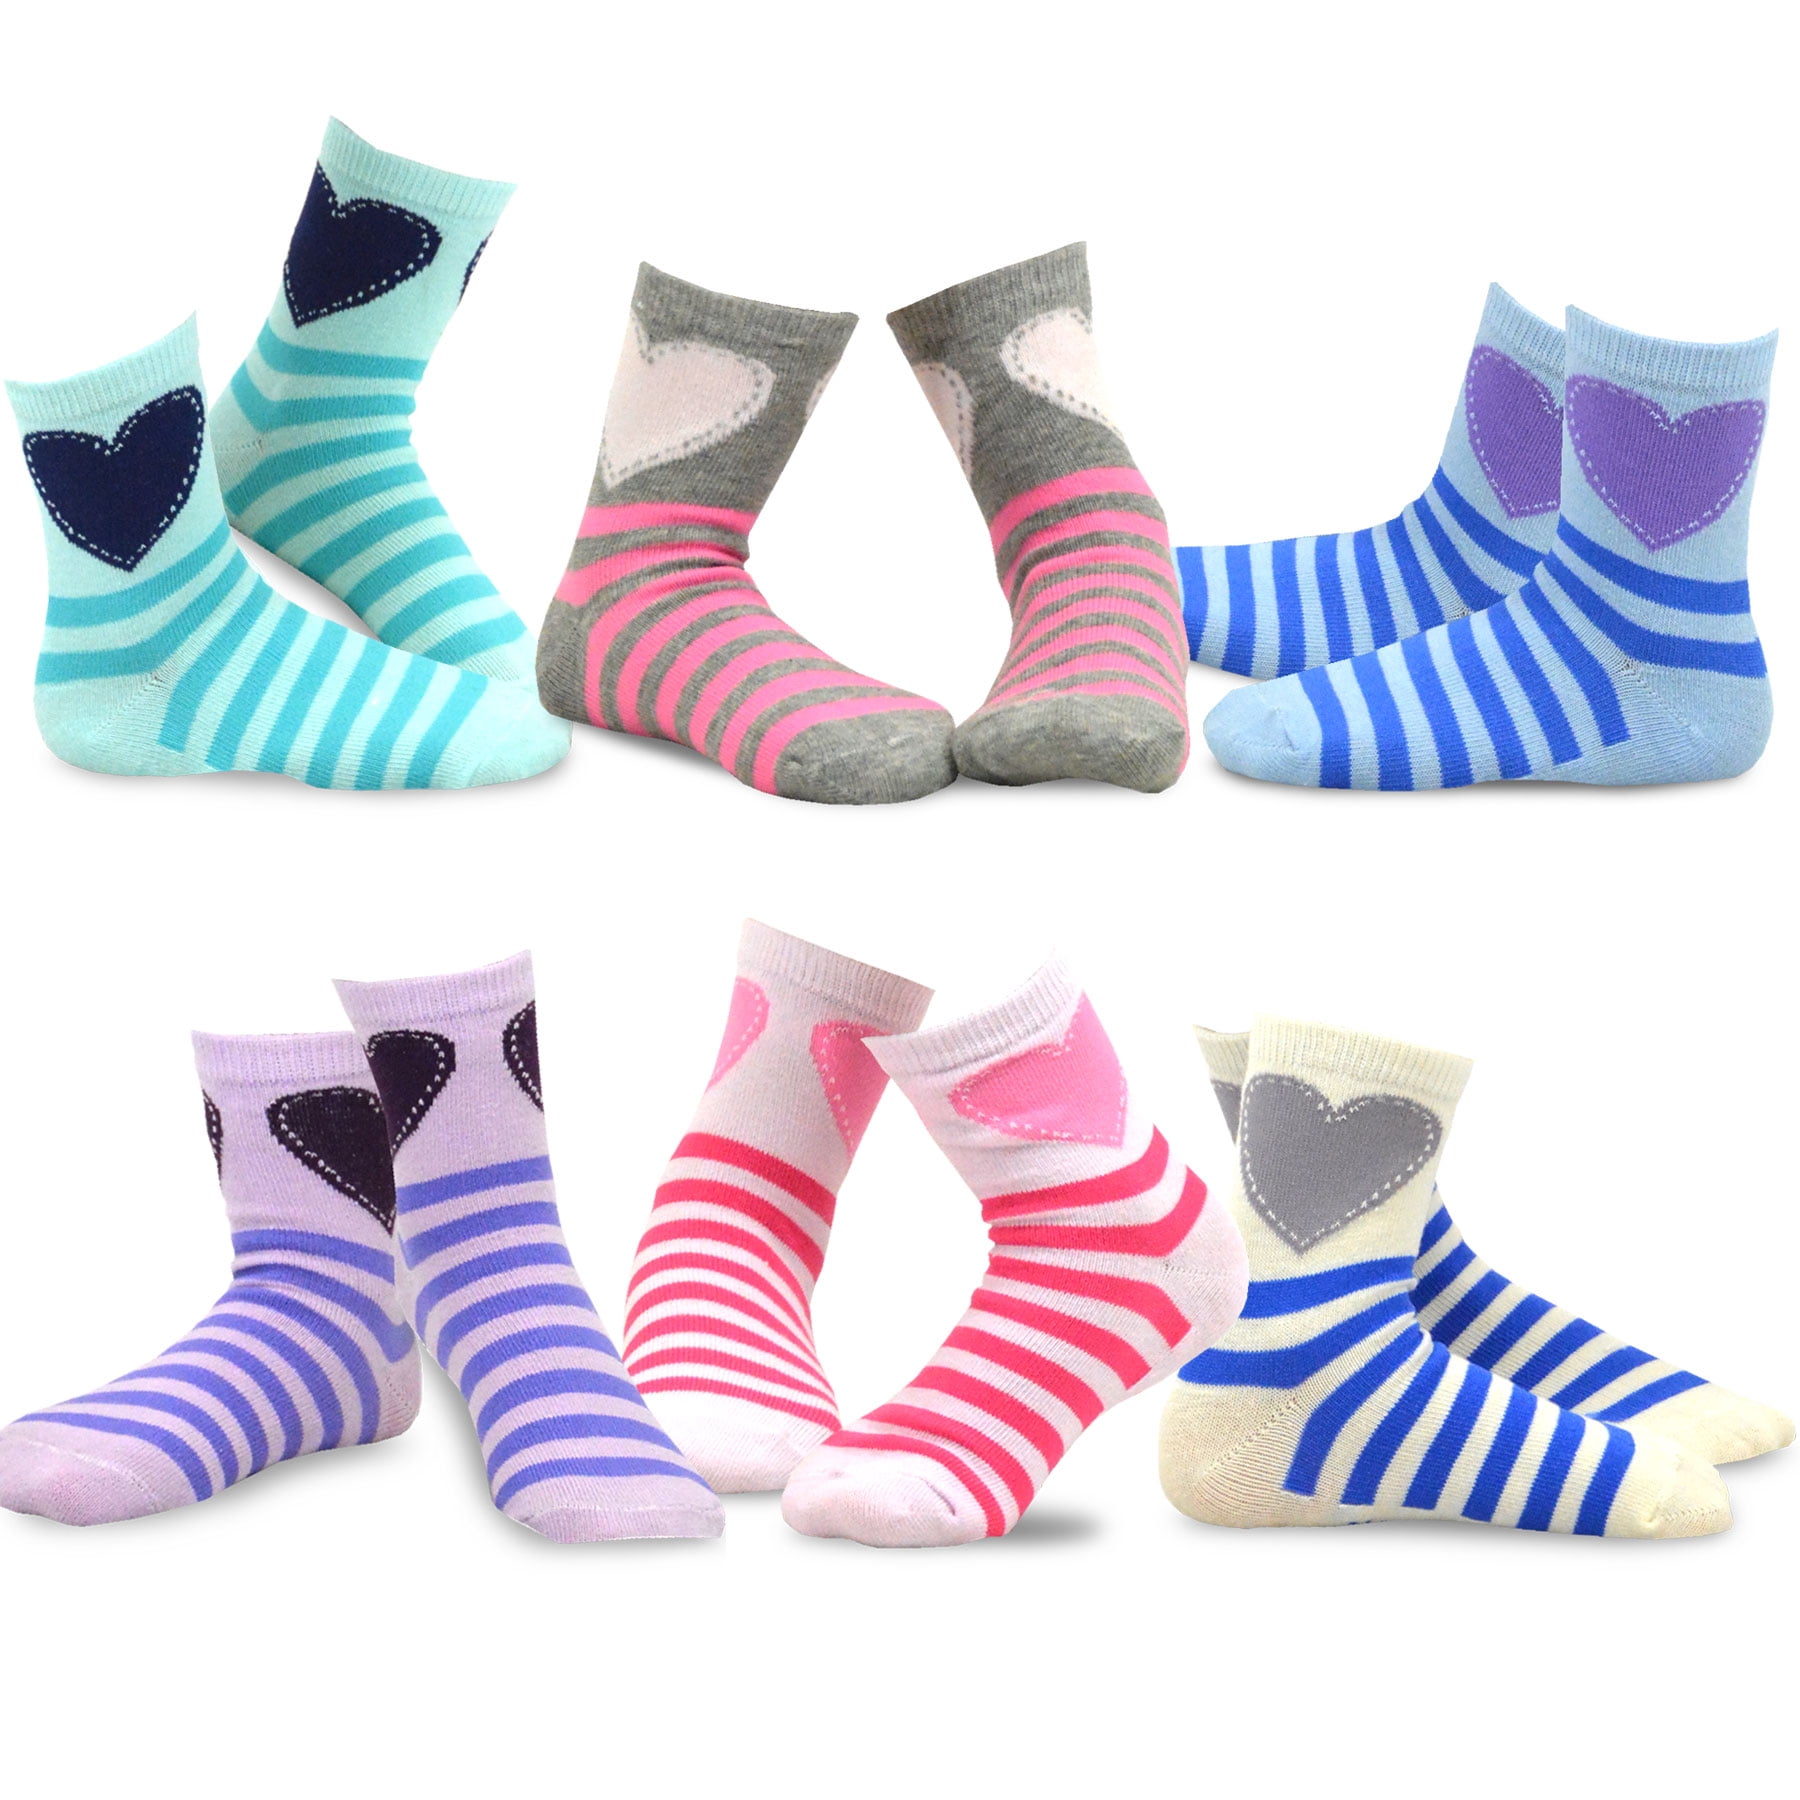 TeeHee Kids Cotton Fashion Crew Socks 6 Pair Pack for Girls - Walmart.com